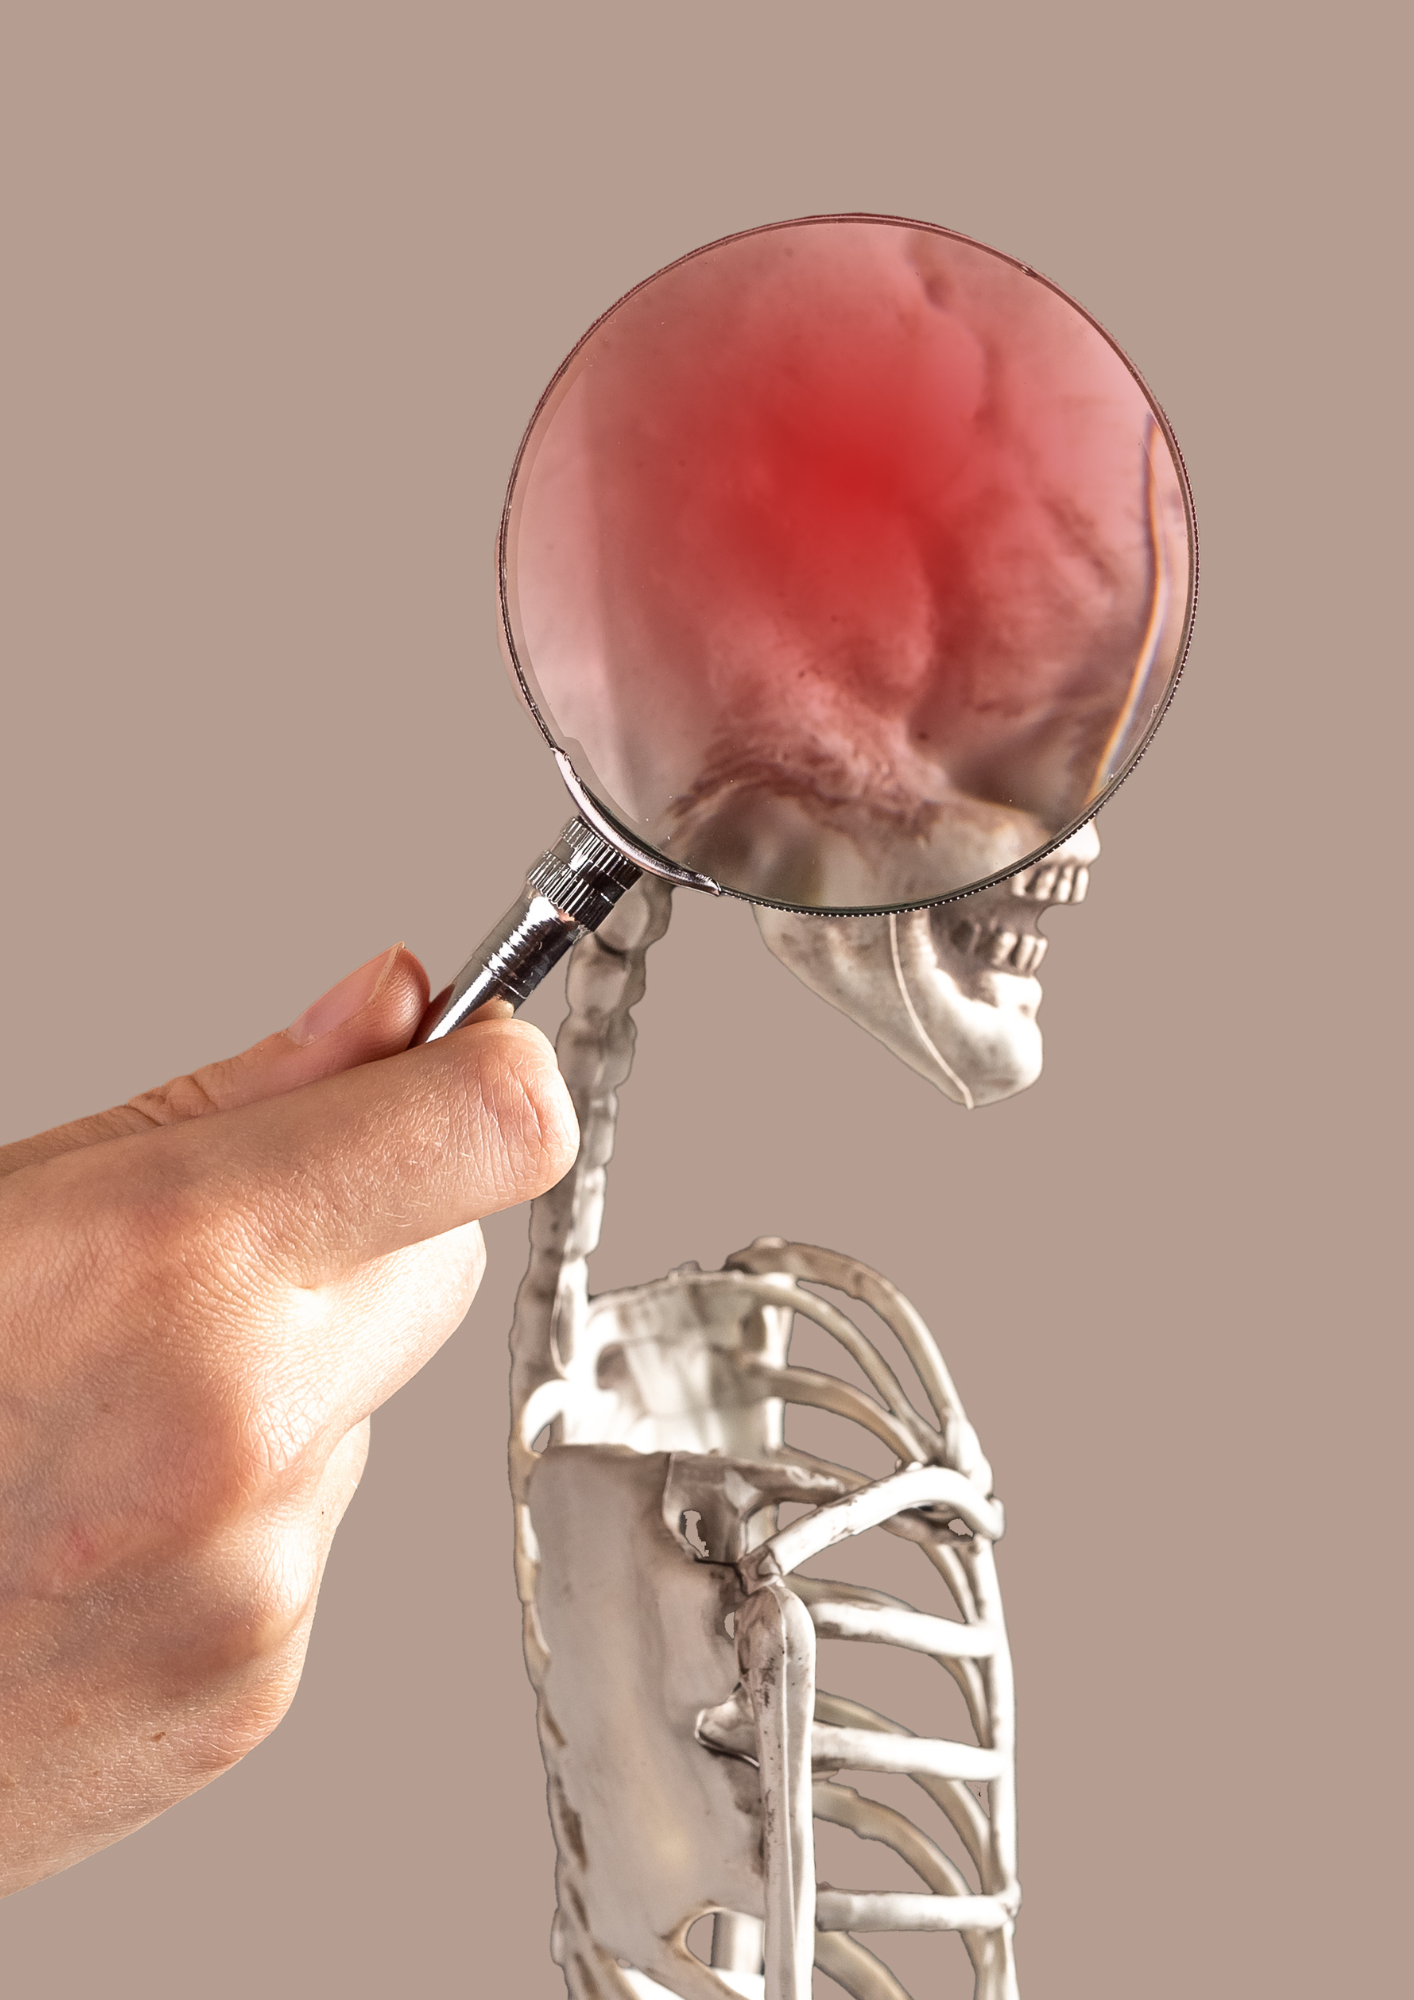 How much is a brain injury case worth?